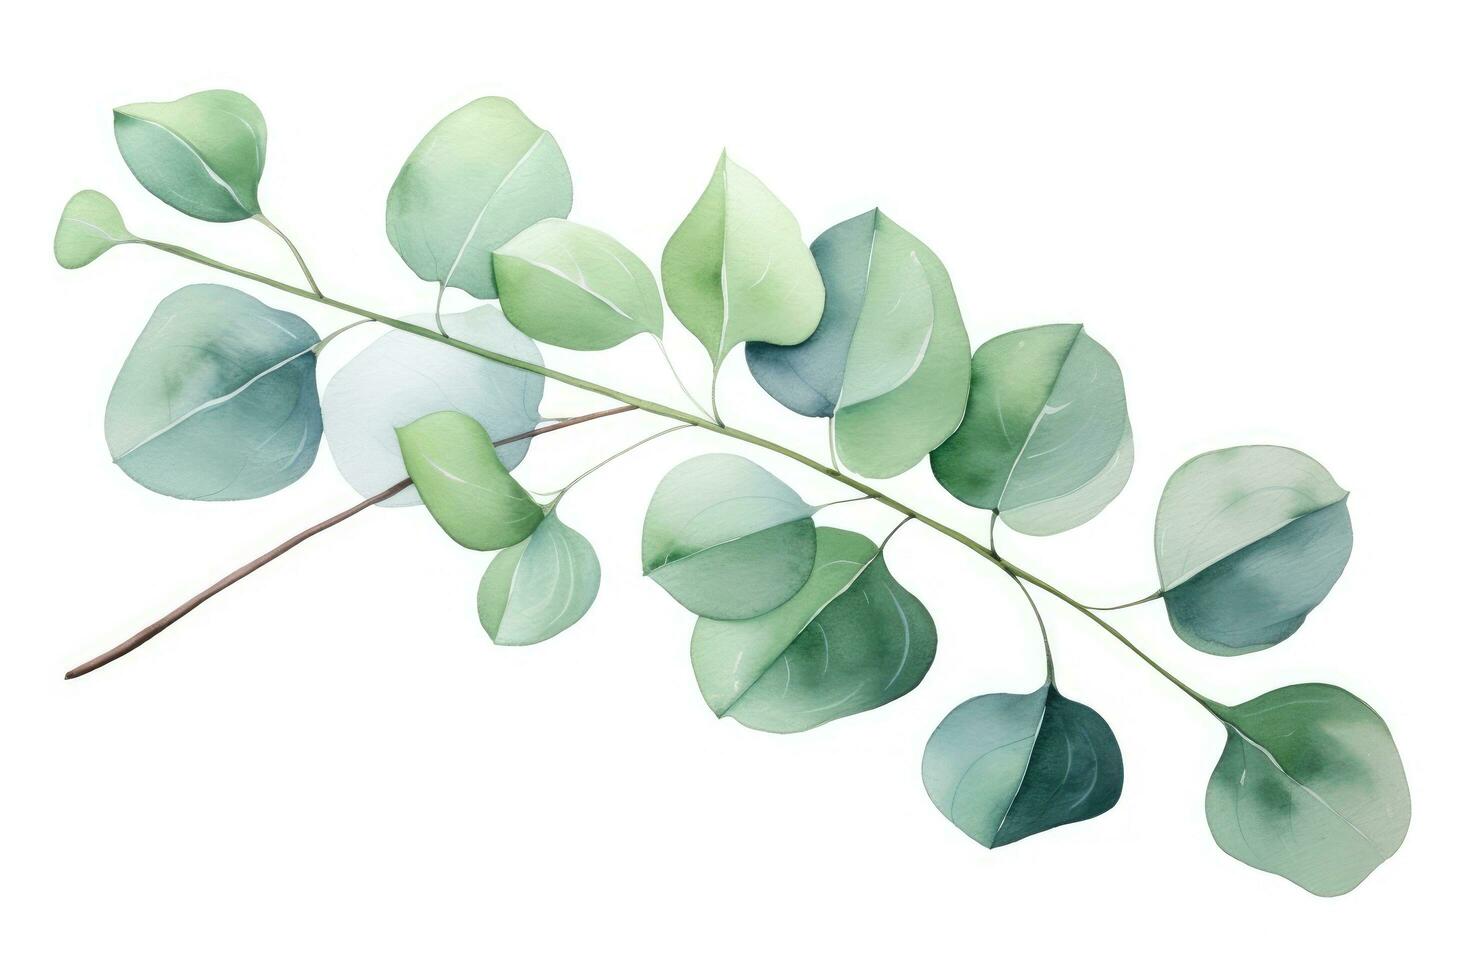 ai generato acquerello eucalipto ramo isolato su bianca sfondo, verde floreale carta nel acquerello con argento dollaro eucalipto le foglie e rami isolato su un' bianca sfondo, ai generato foto